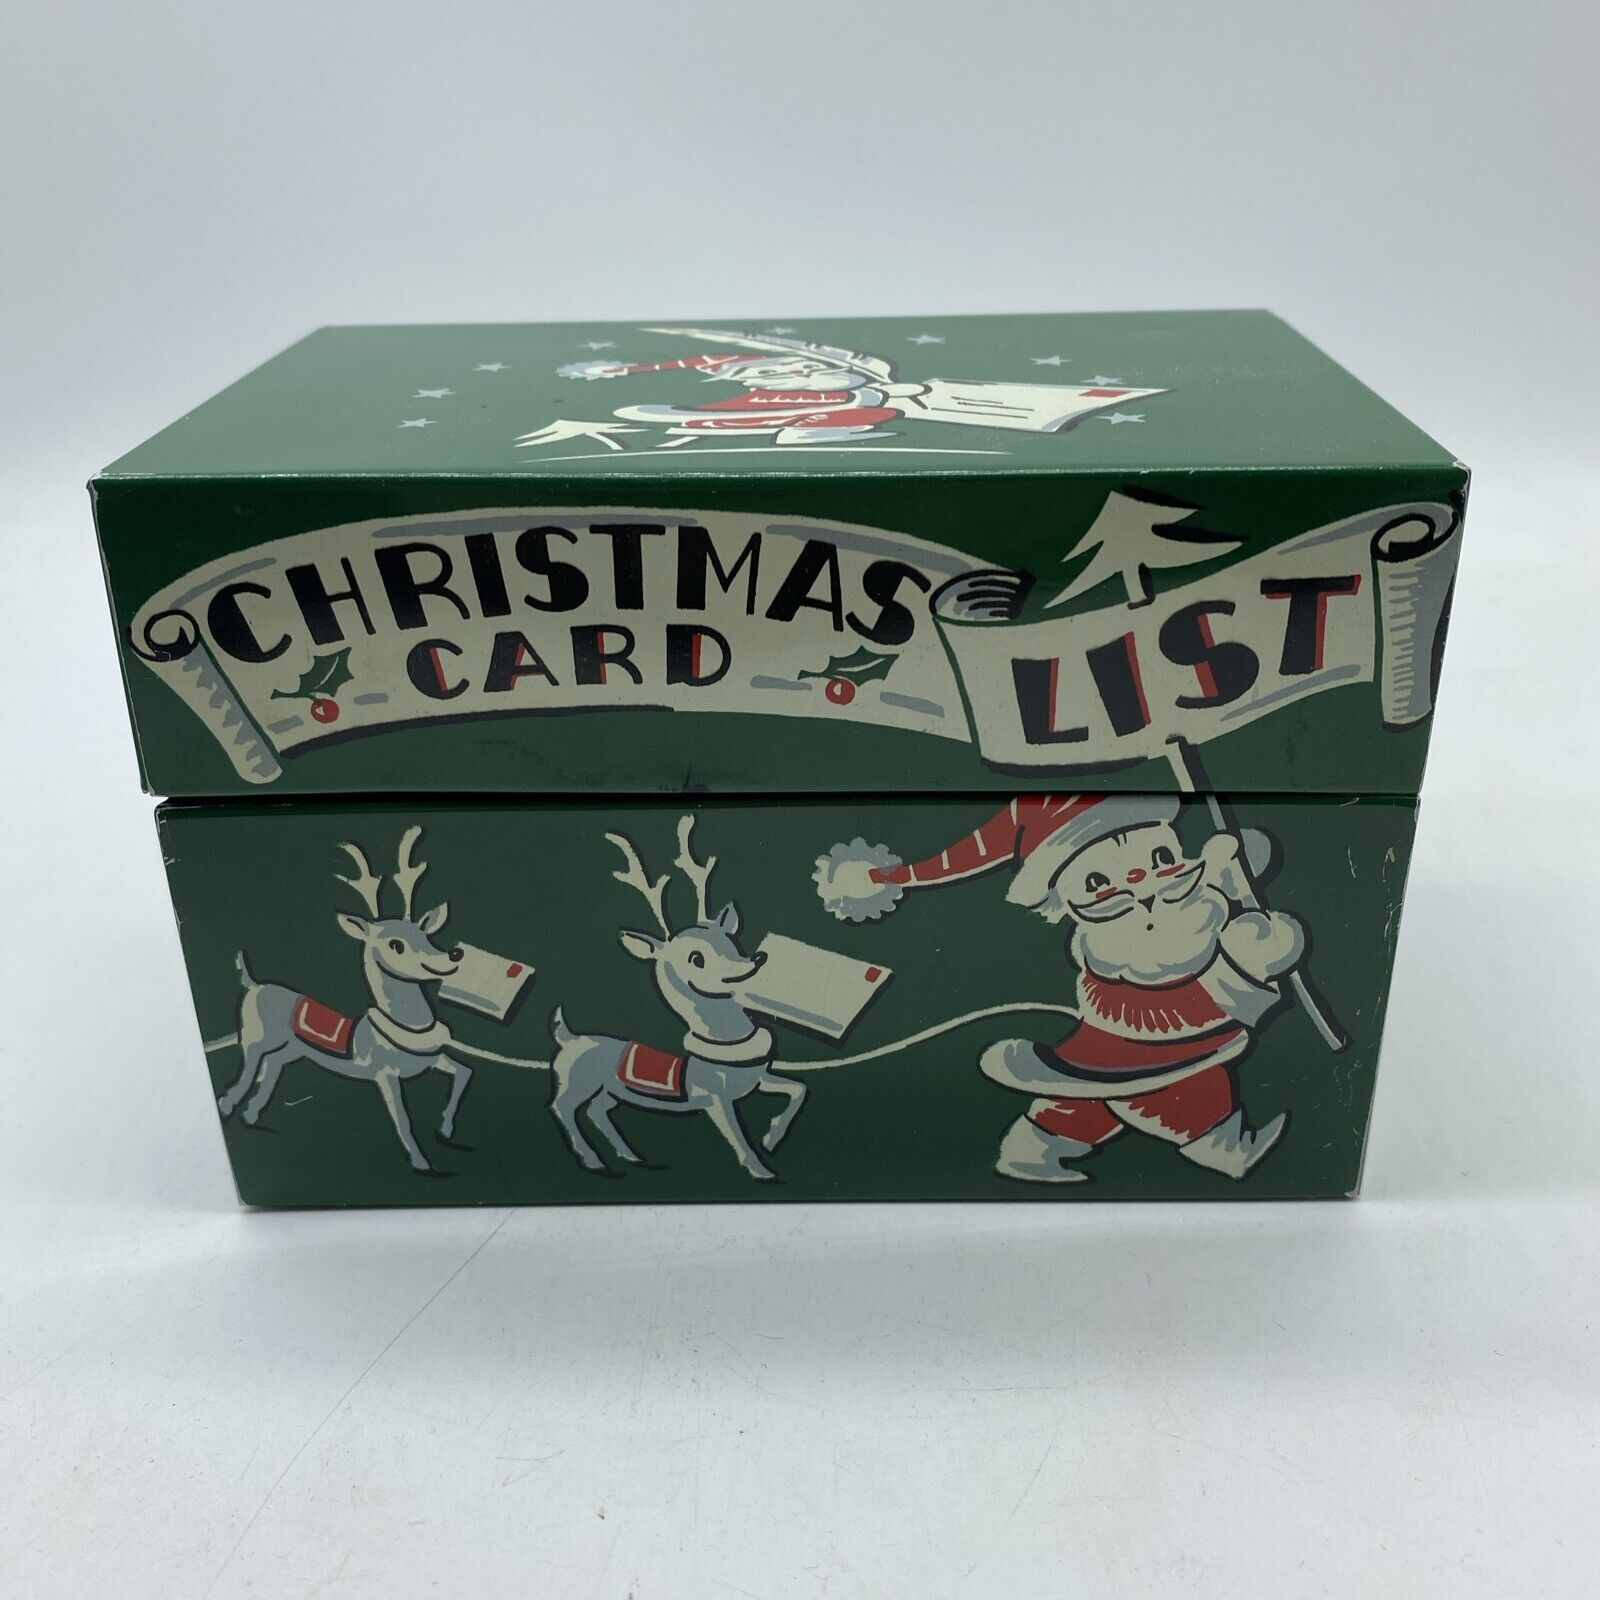 VTG RARE 1950’s Stylecraft Christmas Card List/Recipe Metal Box 5.25”x 3.75x3.25